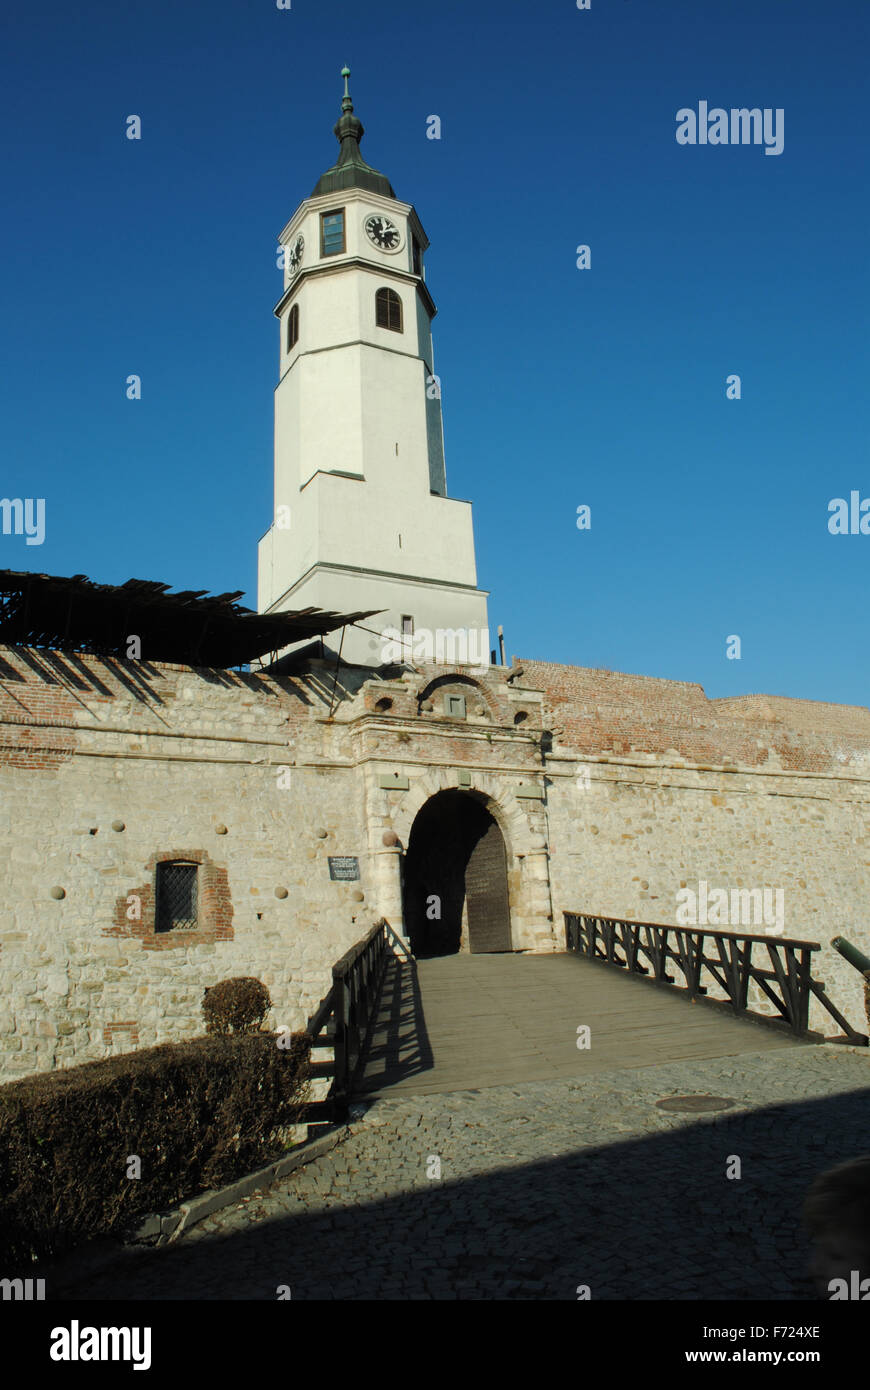 The Clock Gate and the Clock Tower (Sahat Kula), both are parts of Belgrade Fortress (Kalemegdan Park). Stock Photo